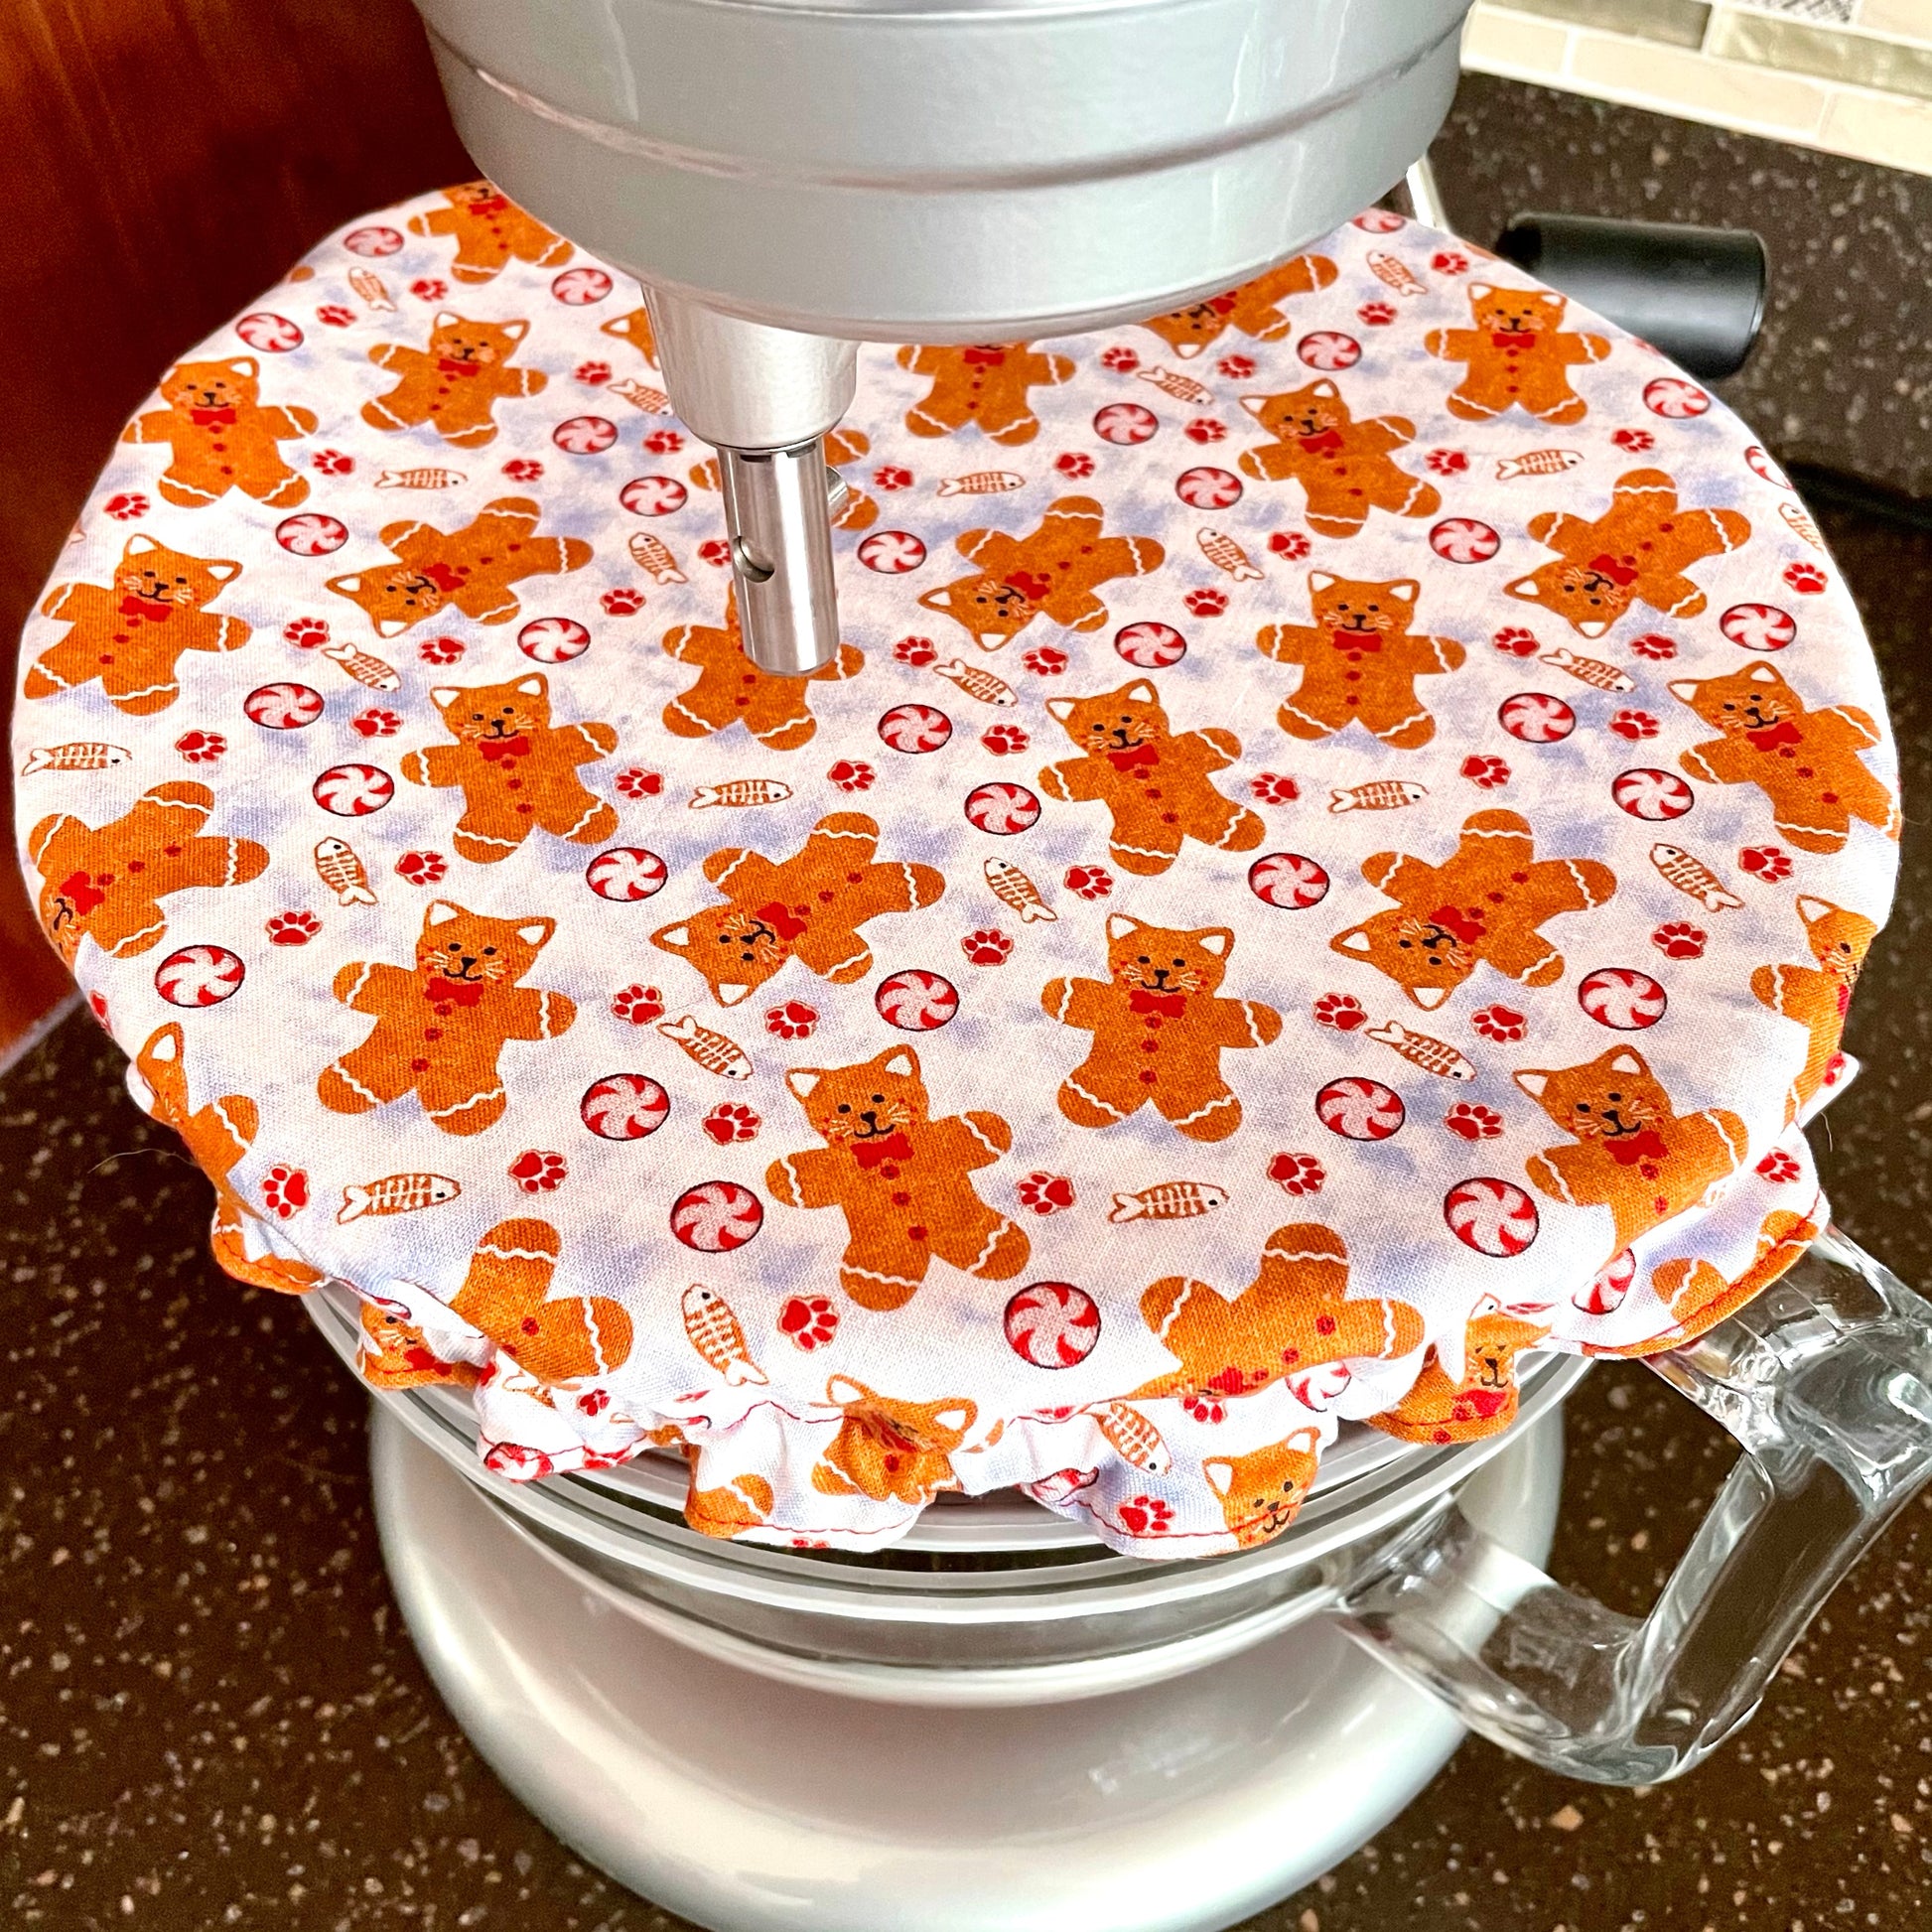 Kitchenaid Stand Mixer bowl covers